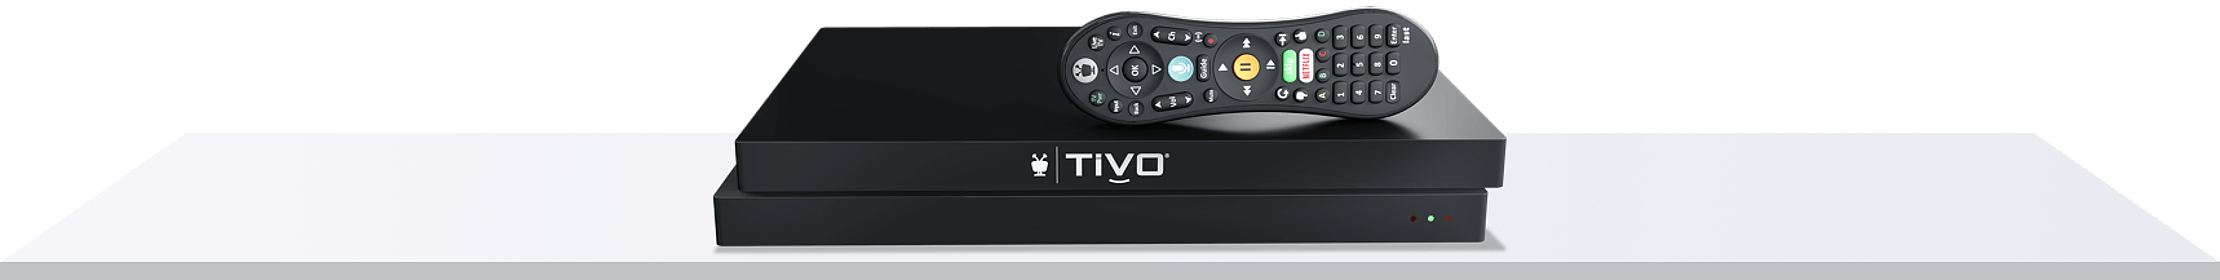 TiVo on shelf